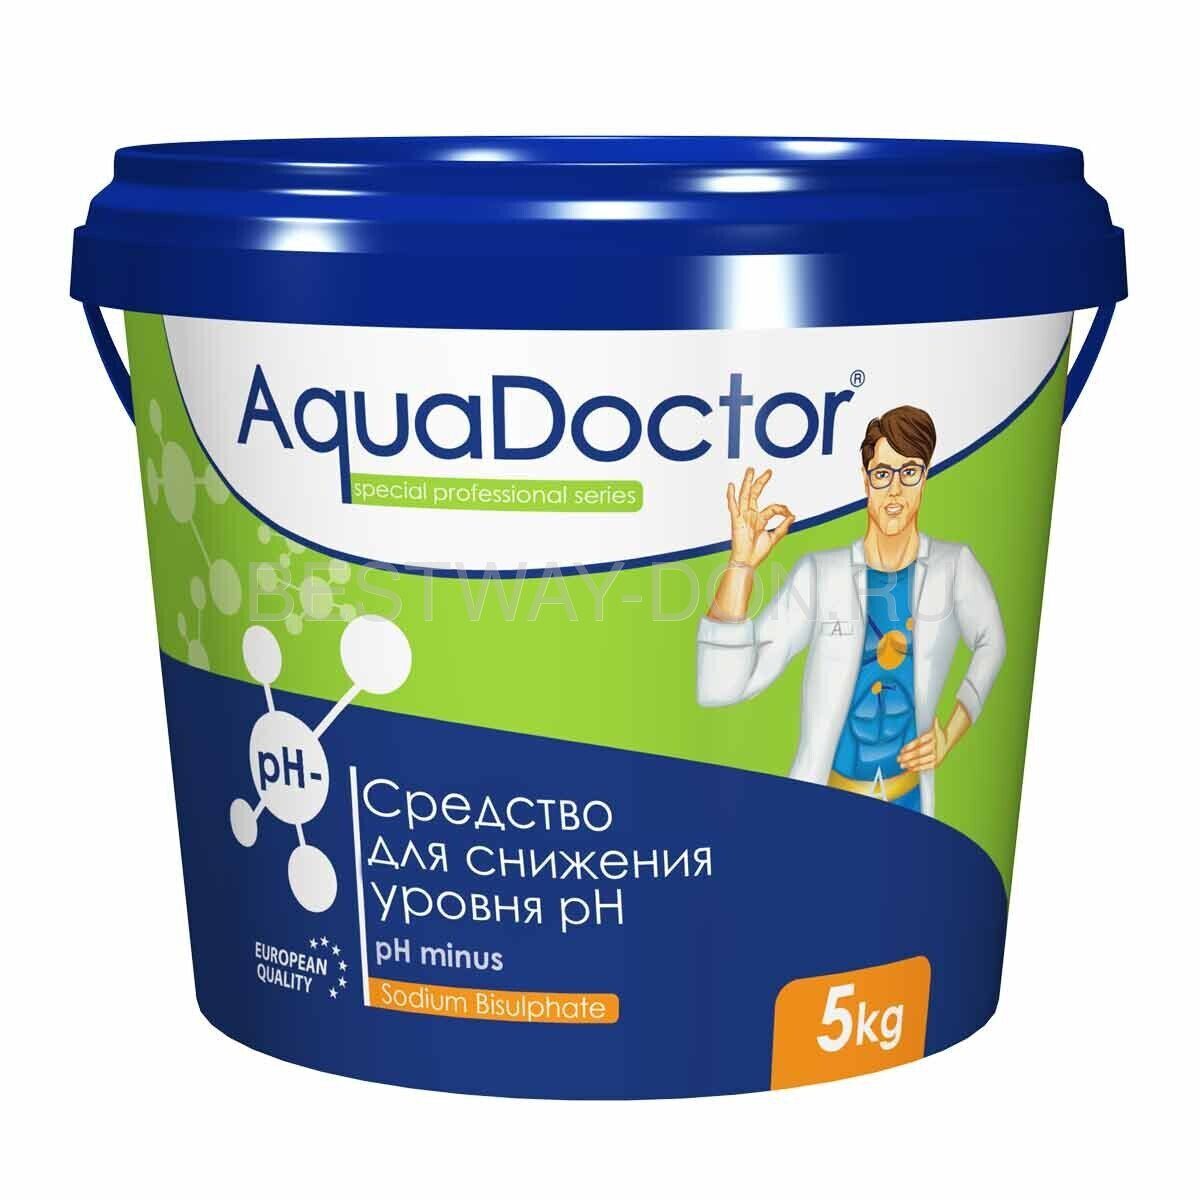 РН- рН минус в гранулах Aqua Doctor 5 кг